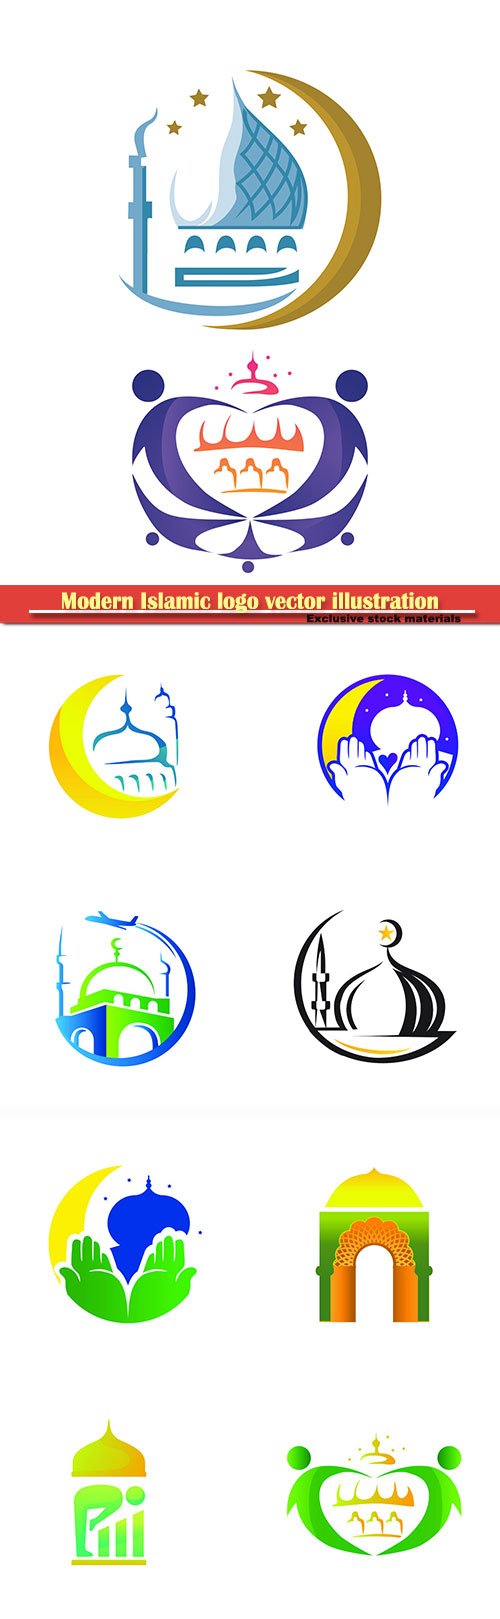 Modern Islamic logo vector illustration